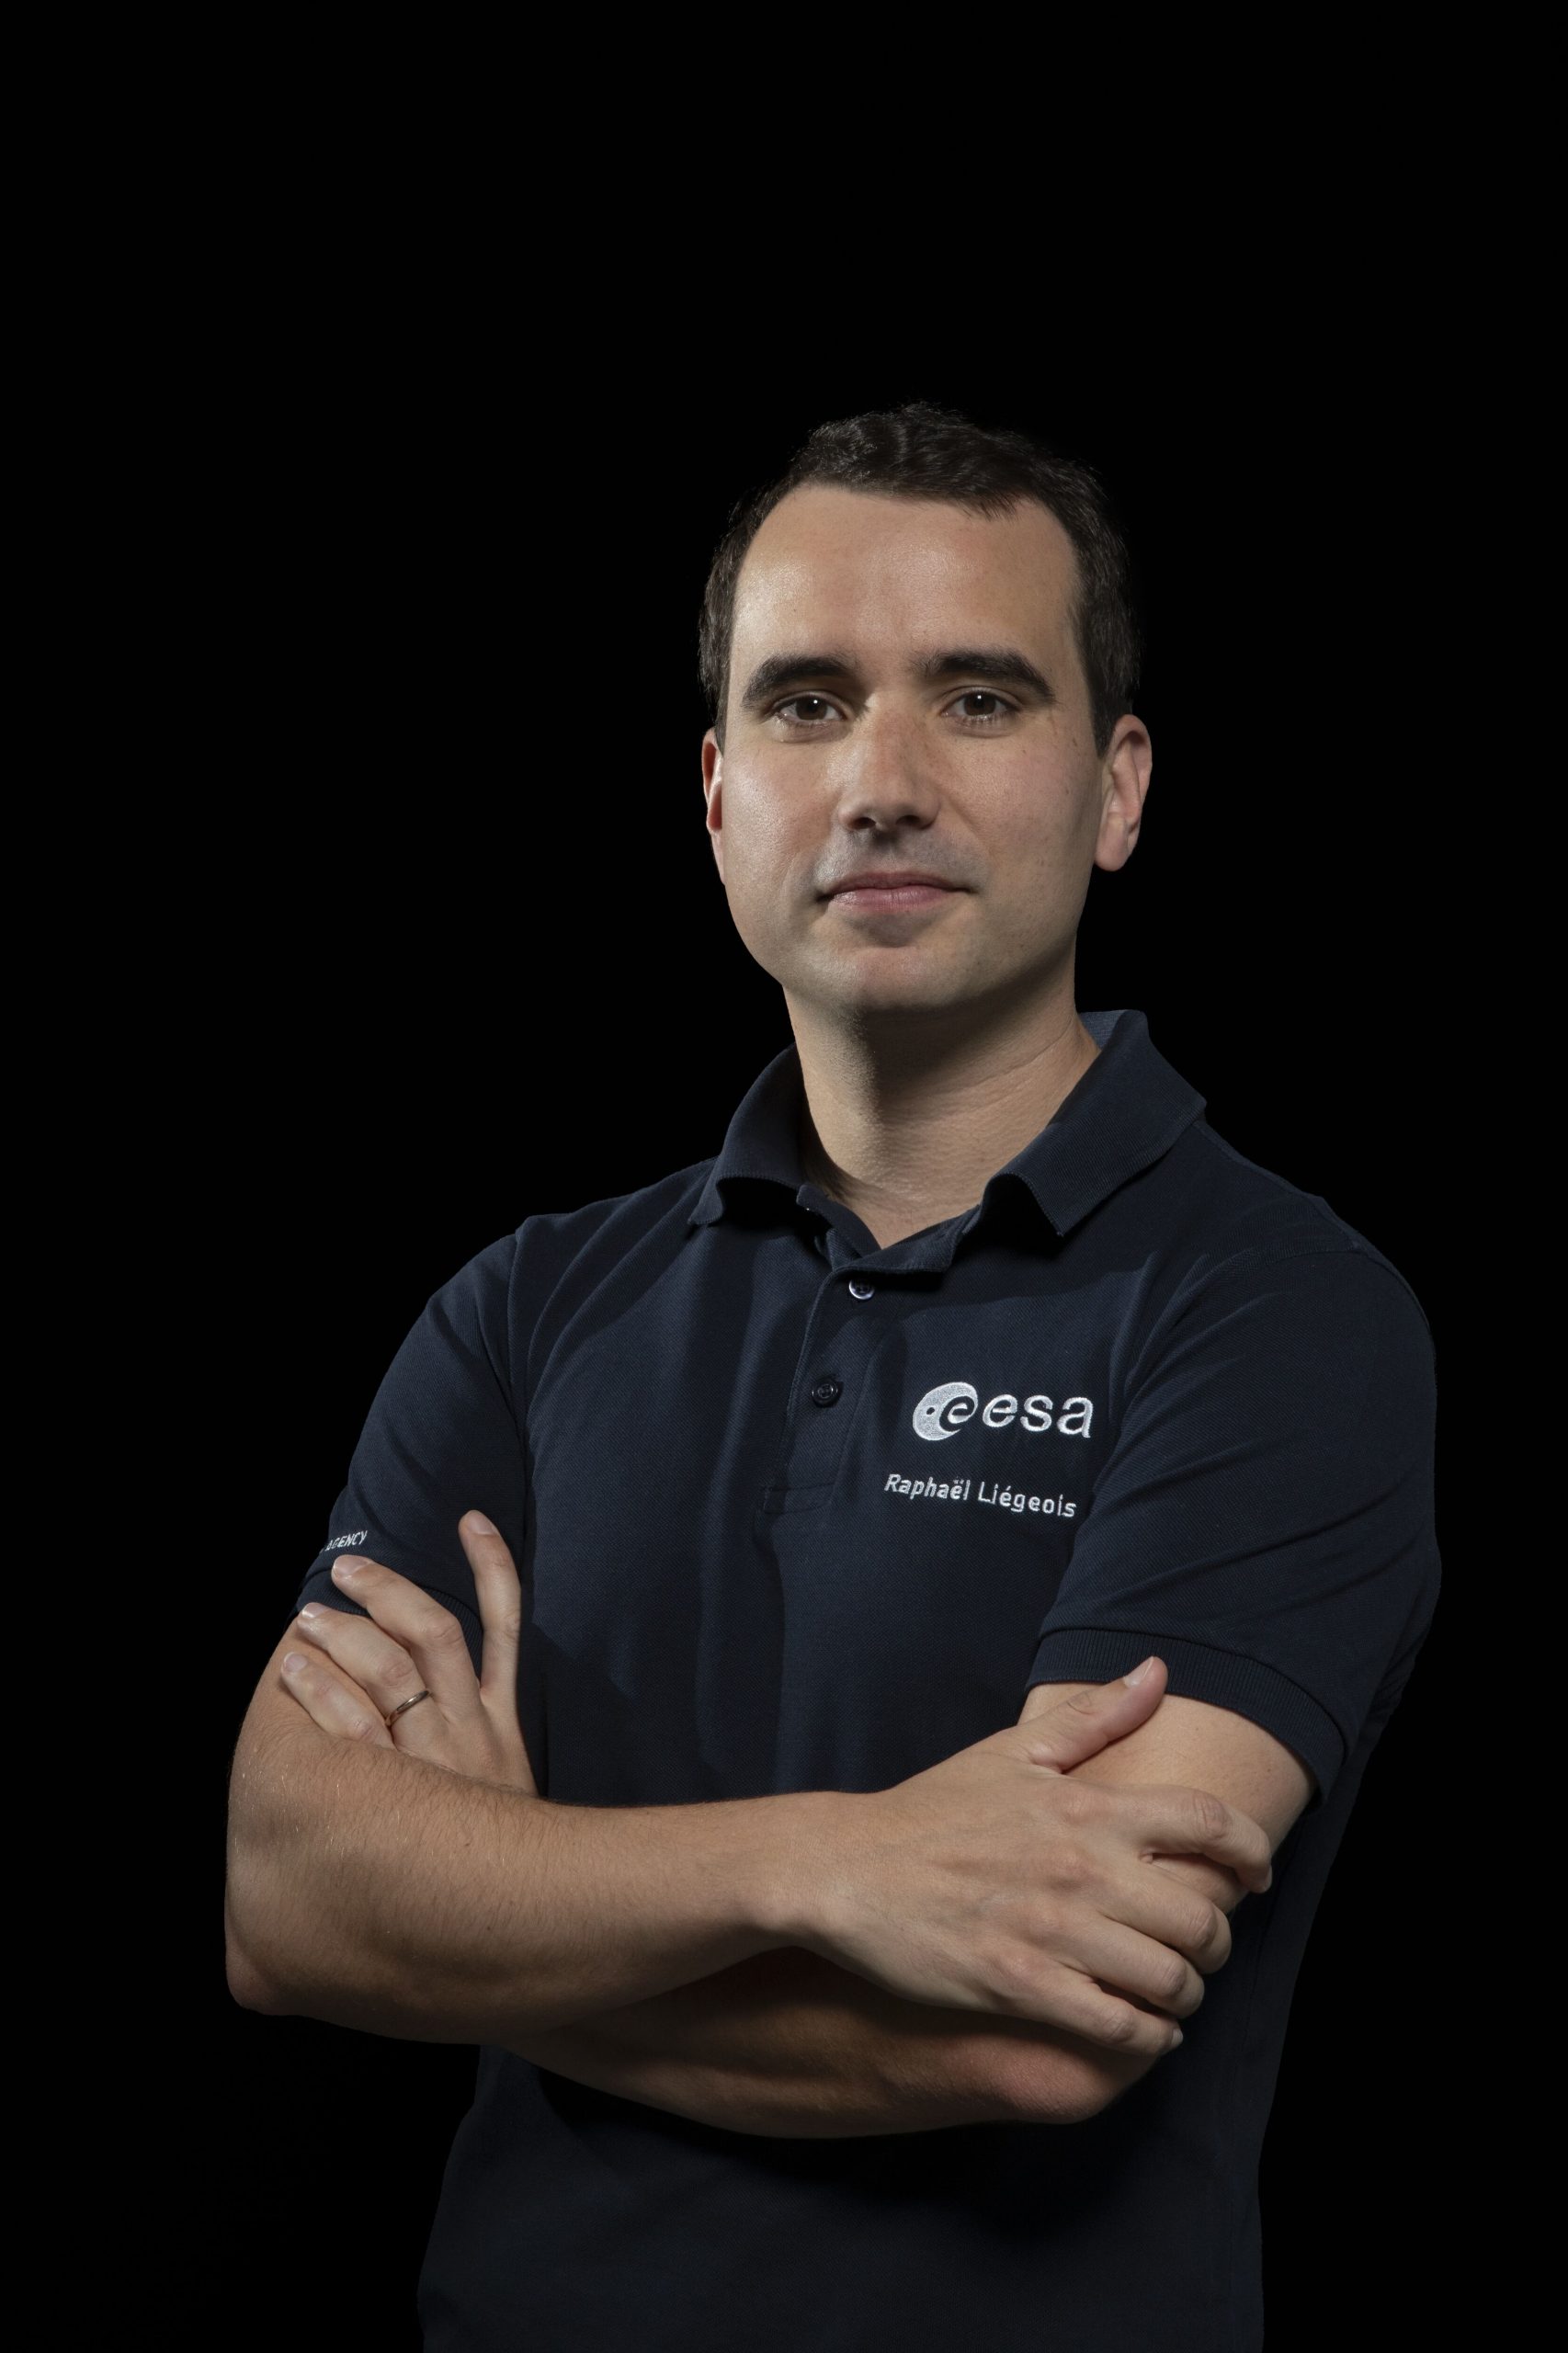 Portrait of ESA astronaut candidate Raphaël Liégeois. Credit: ESA